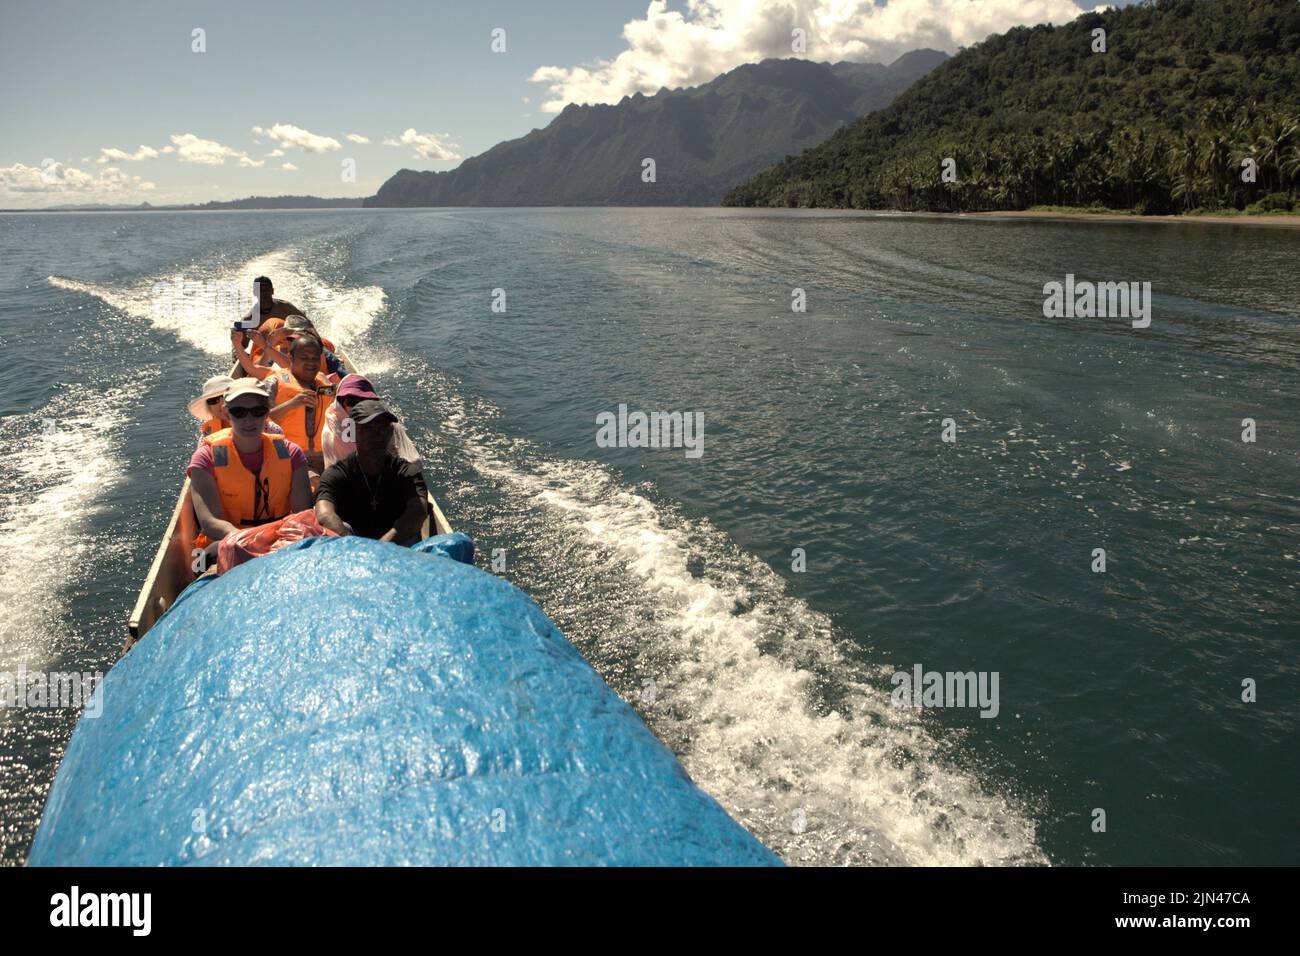 A boat carrying tourists is sailing on the water off the coast of Seram Island, near Morale village in Seram Utara Barat, Maluku Tengah, Maluku, Indonesia. Stock Photo